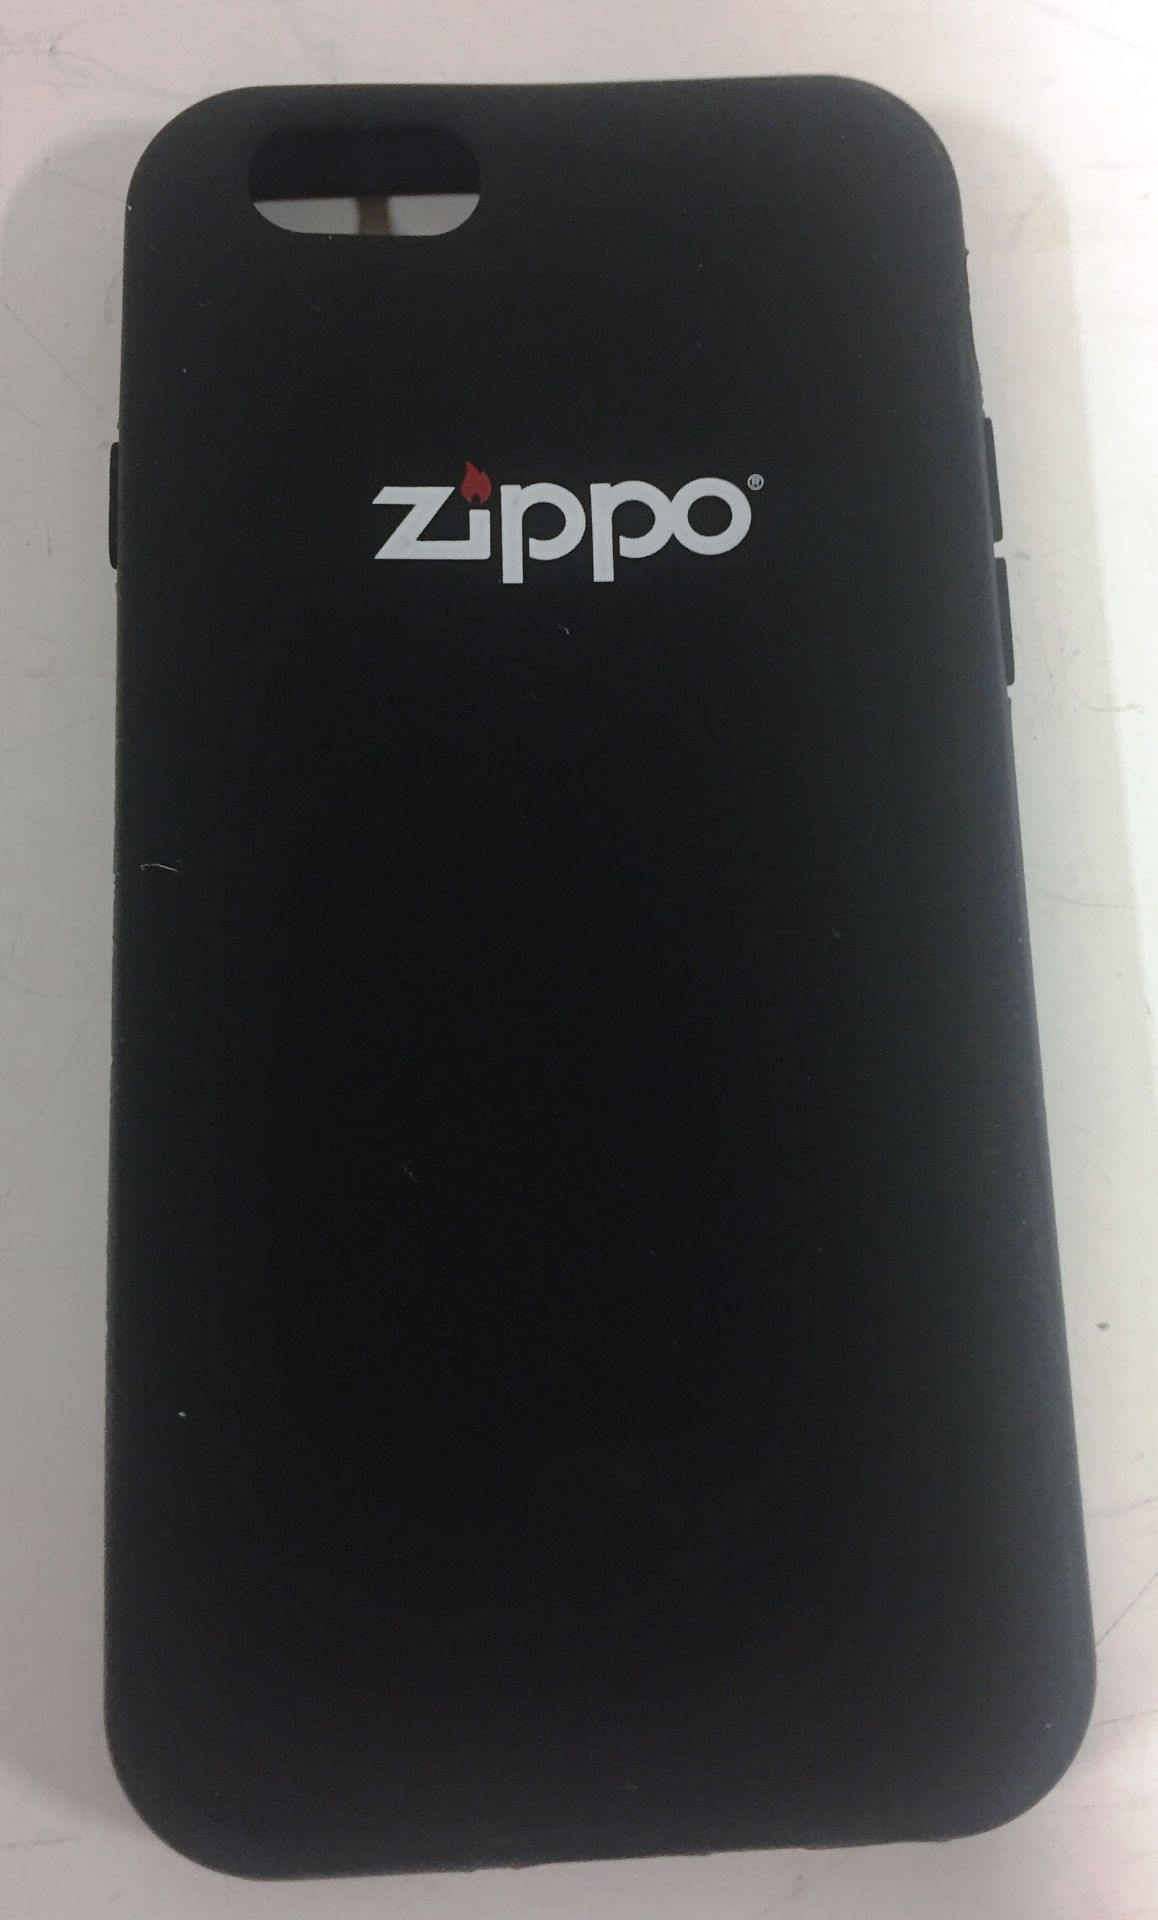 30 x Zippo Silicone iPhone Cases | Black - Image 3 of 3